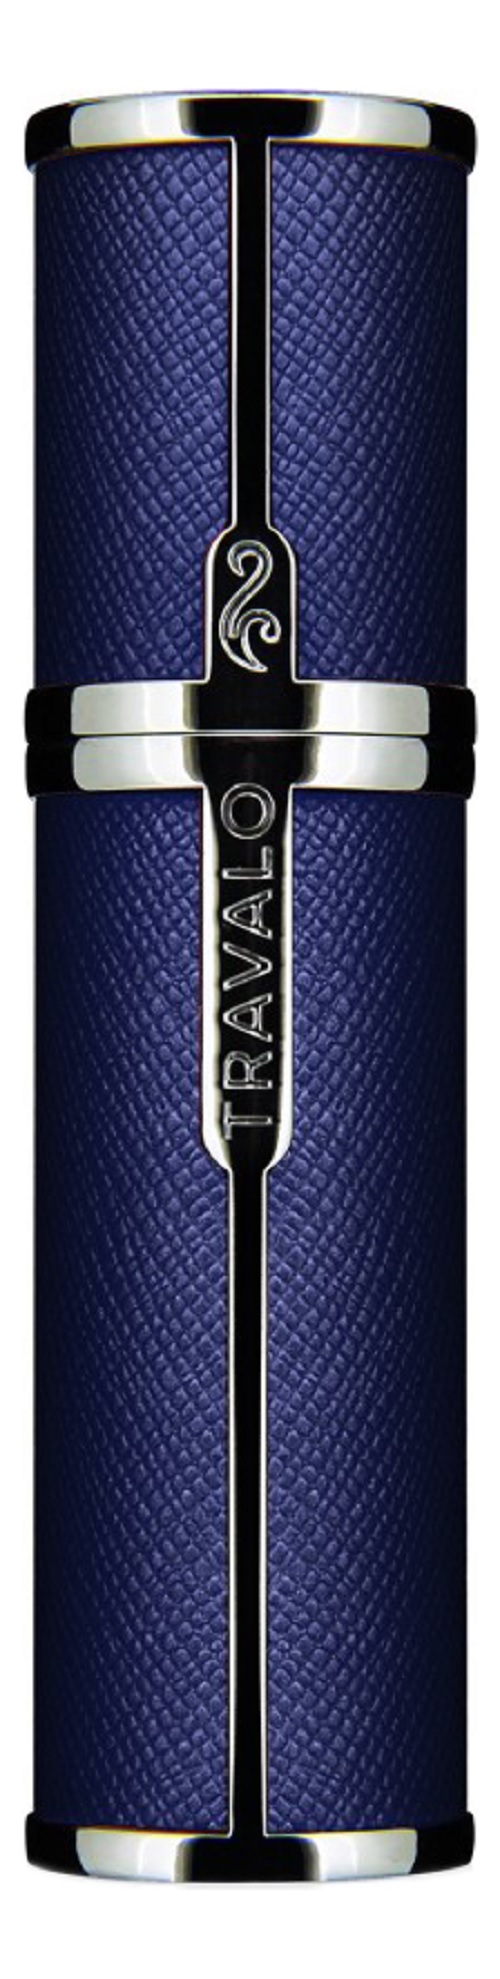 Атомайзер Travalo Milano Easy Fill Perfume Spray 5мл Blue антикитерский механизм самое загадочное изобретение античности